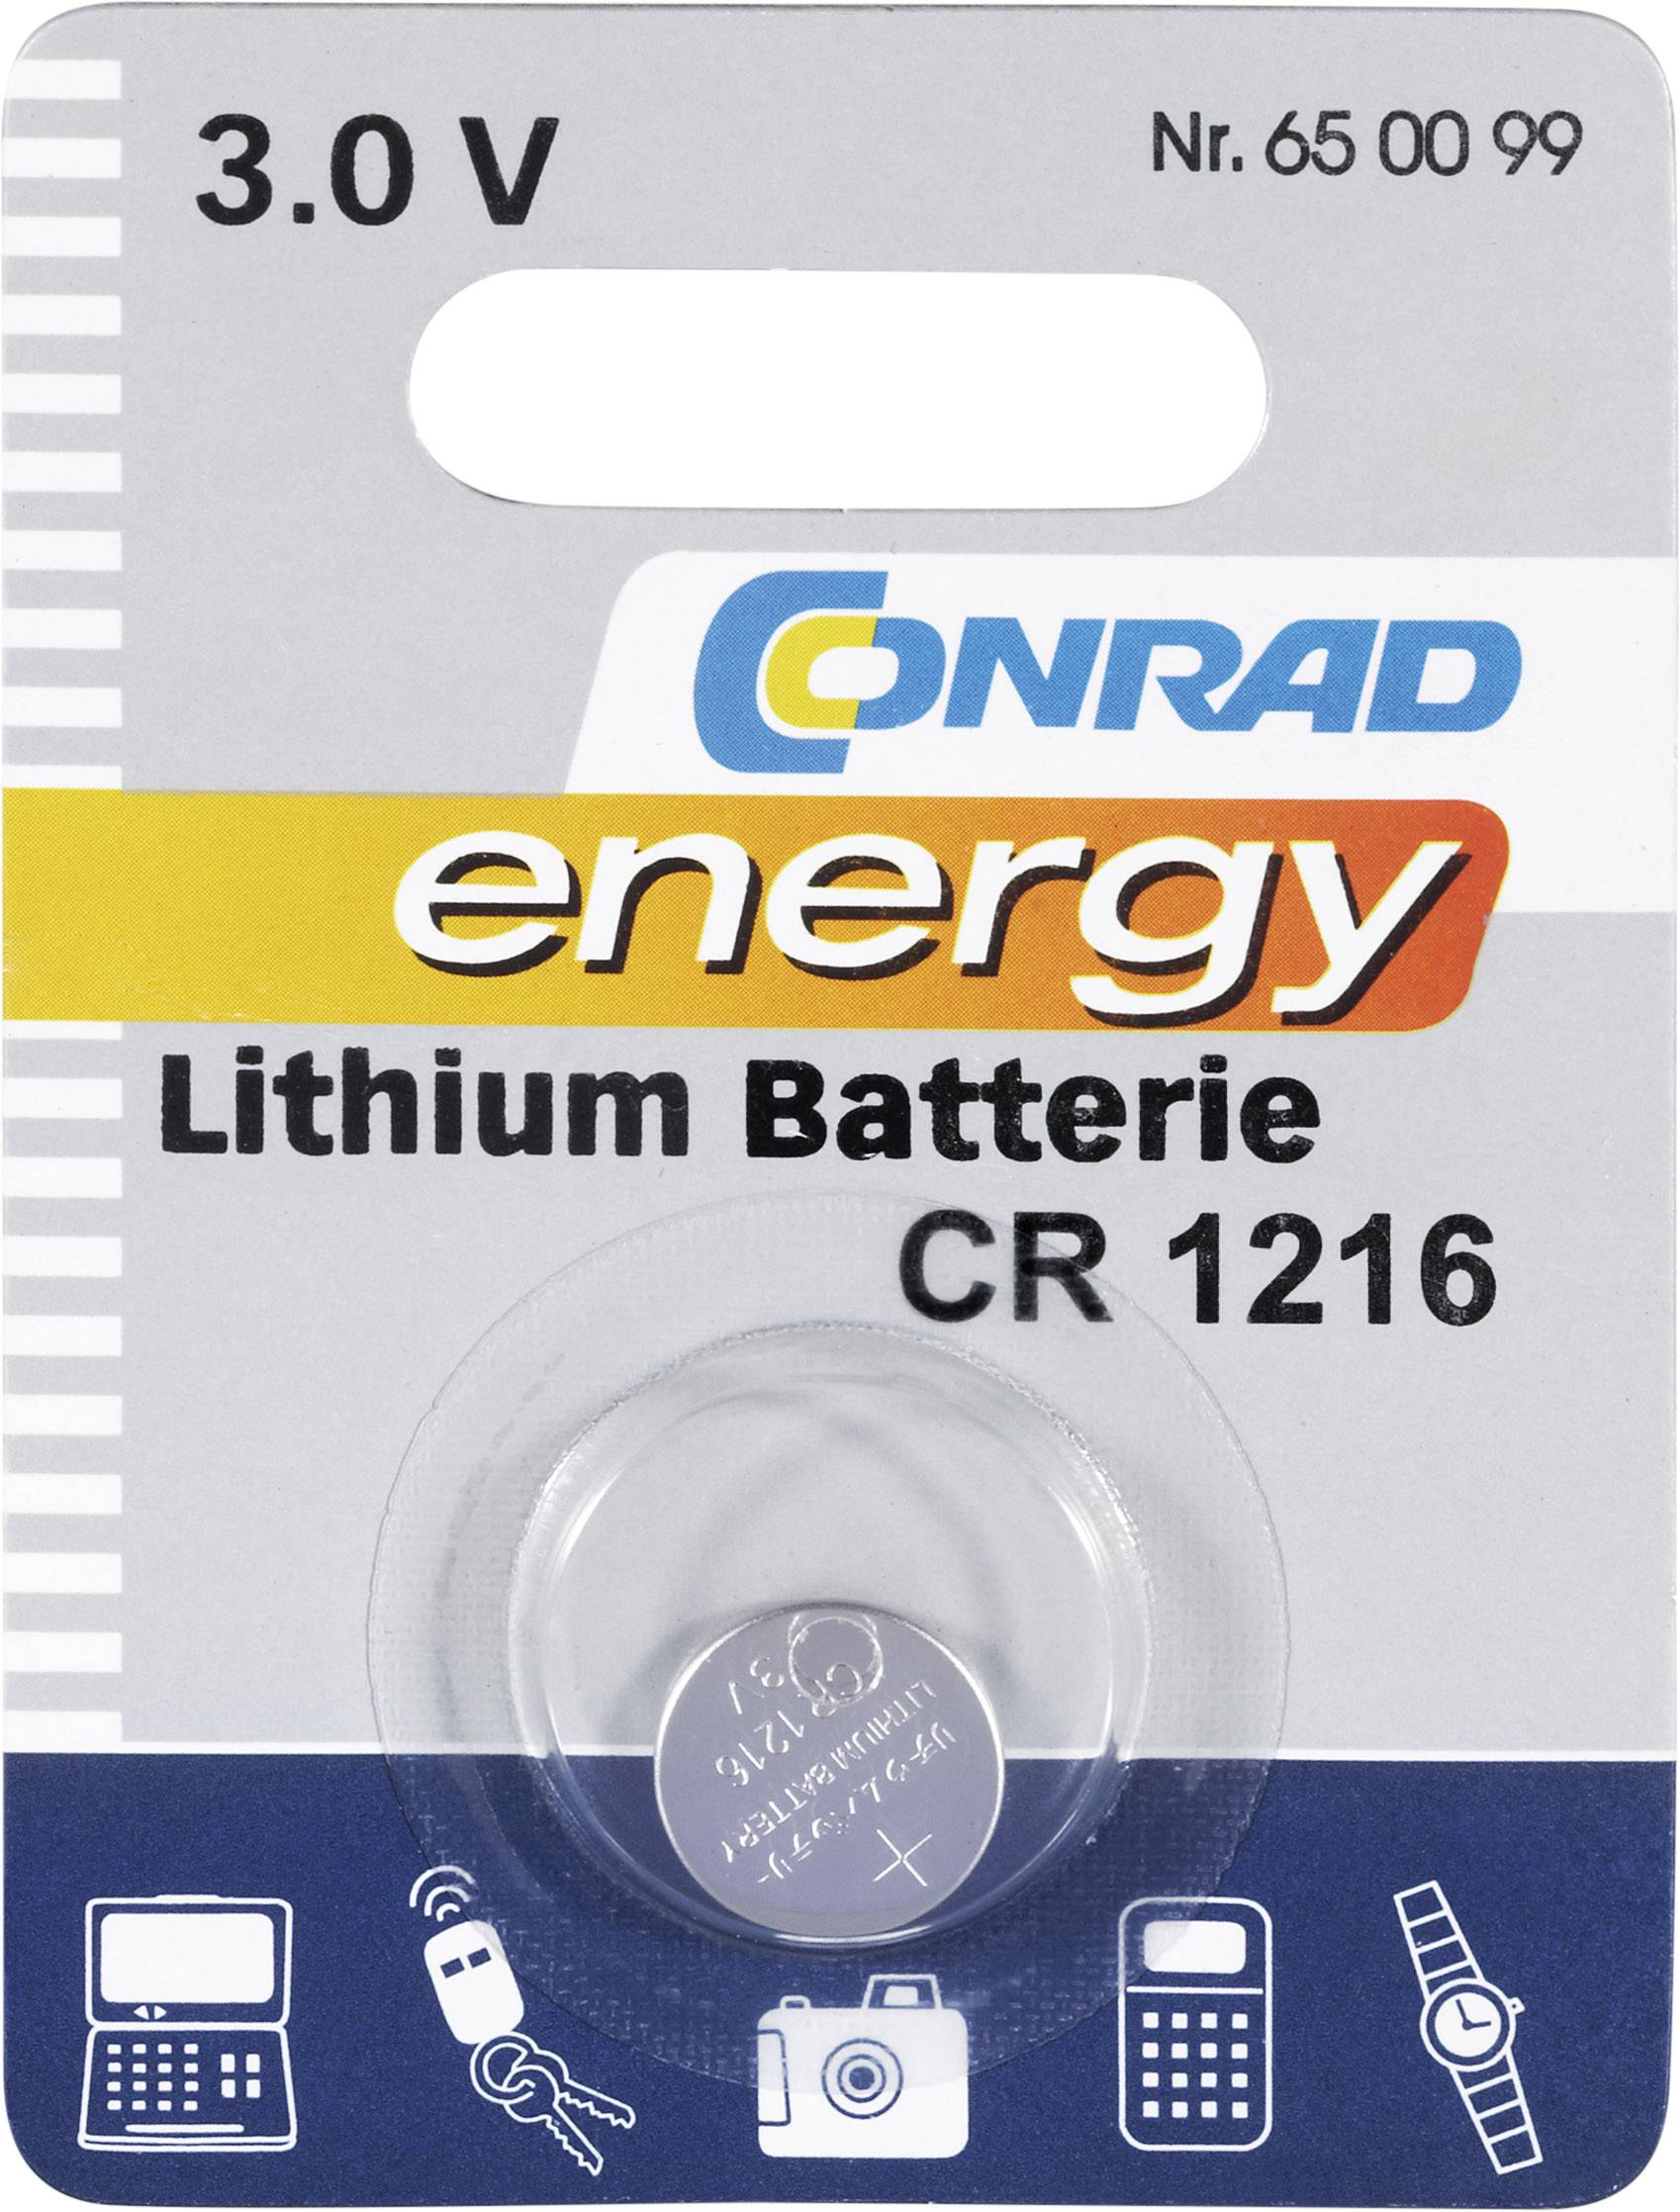 Lithium Battery CR1216